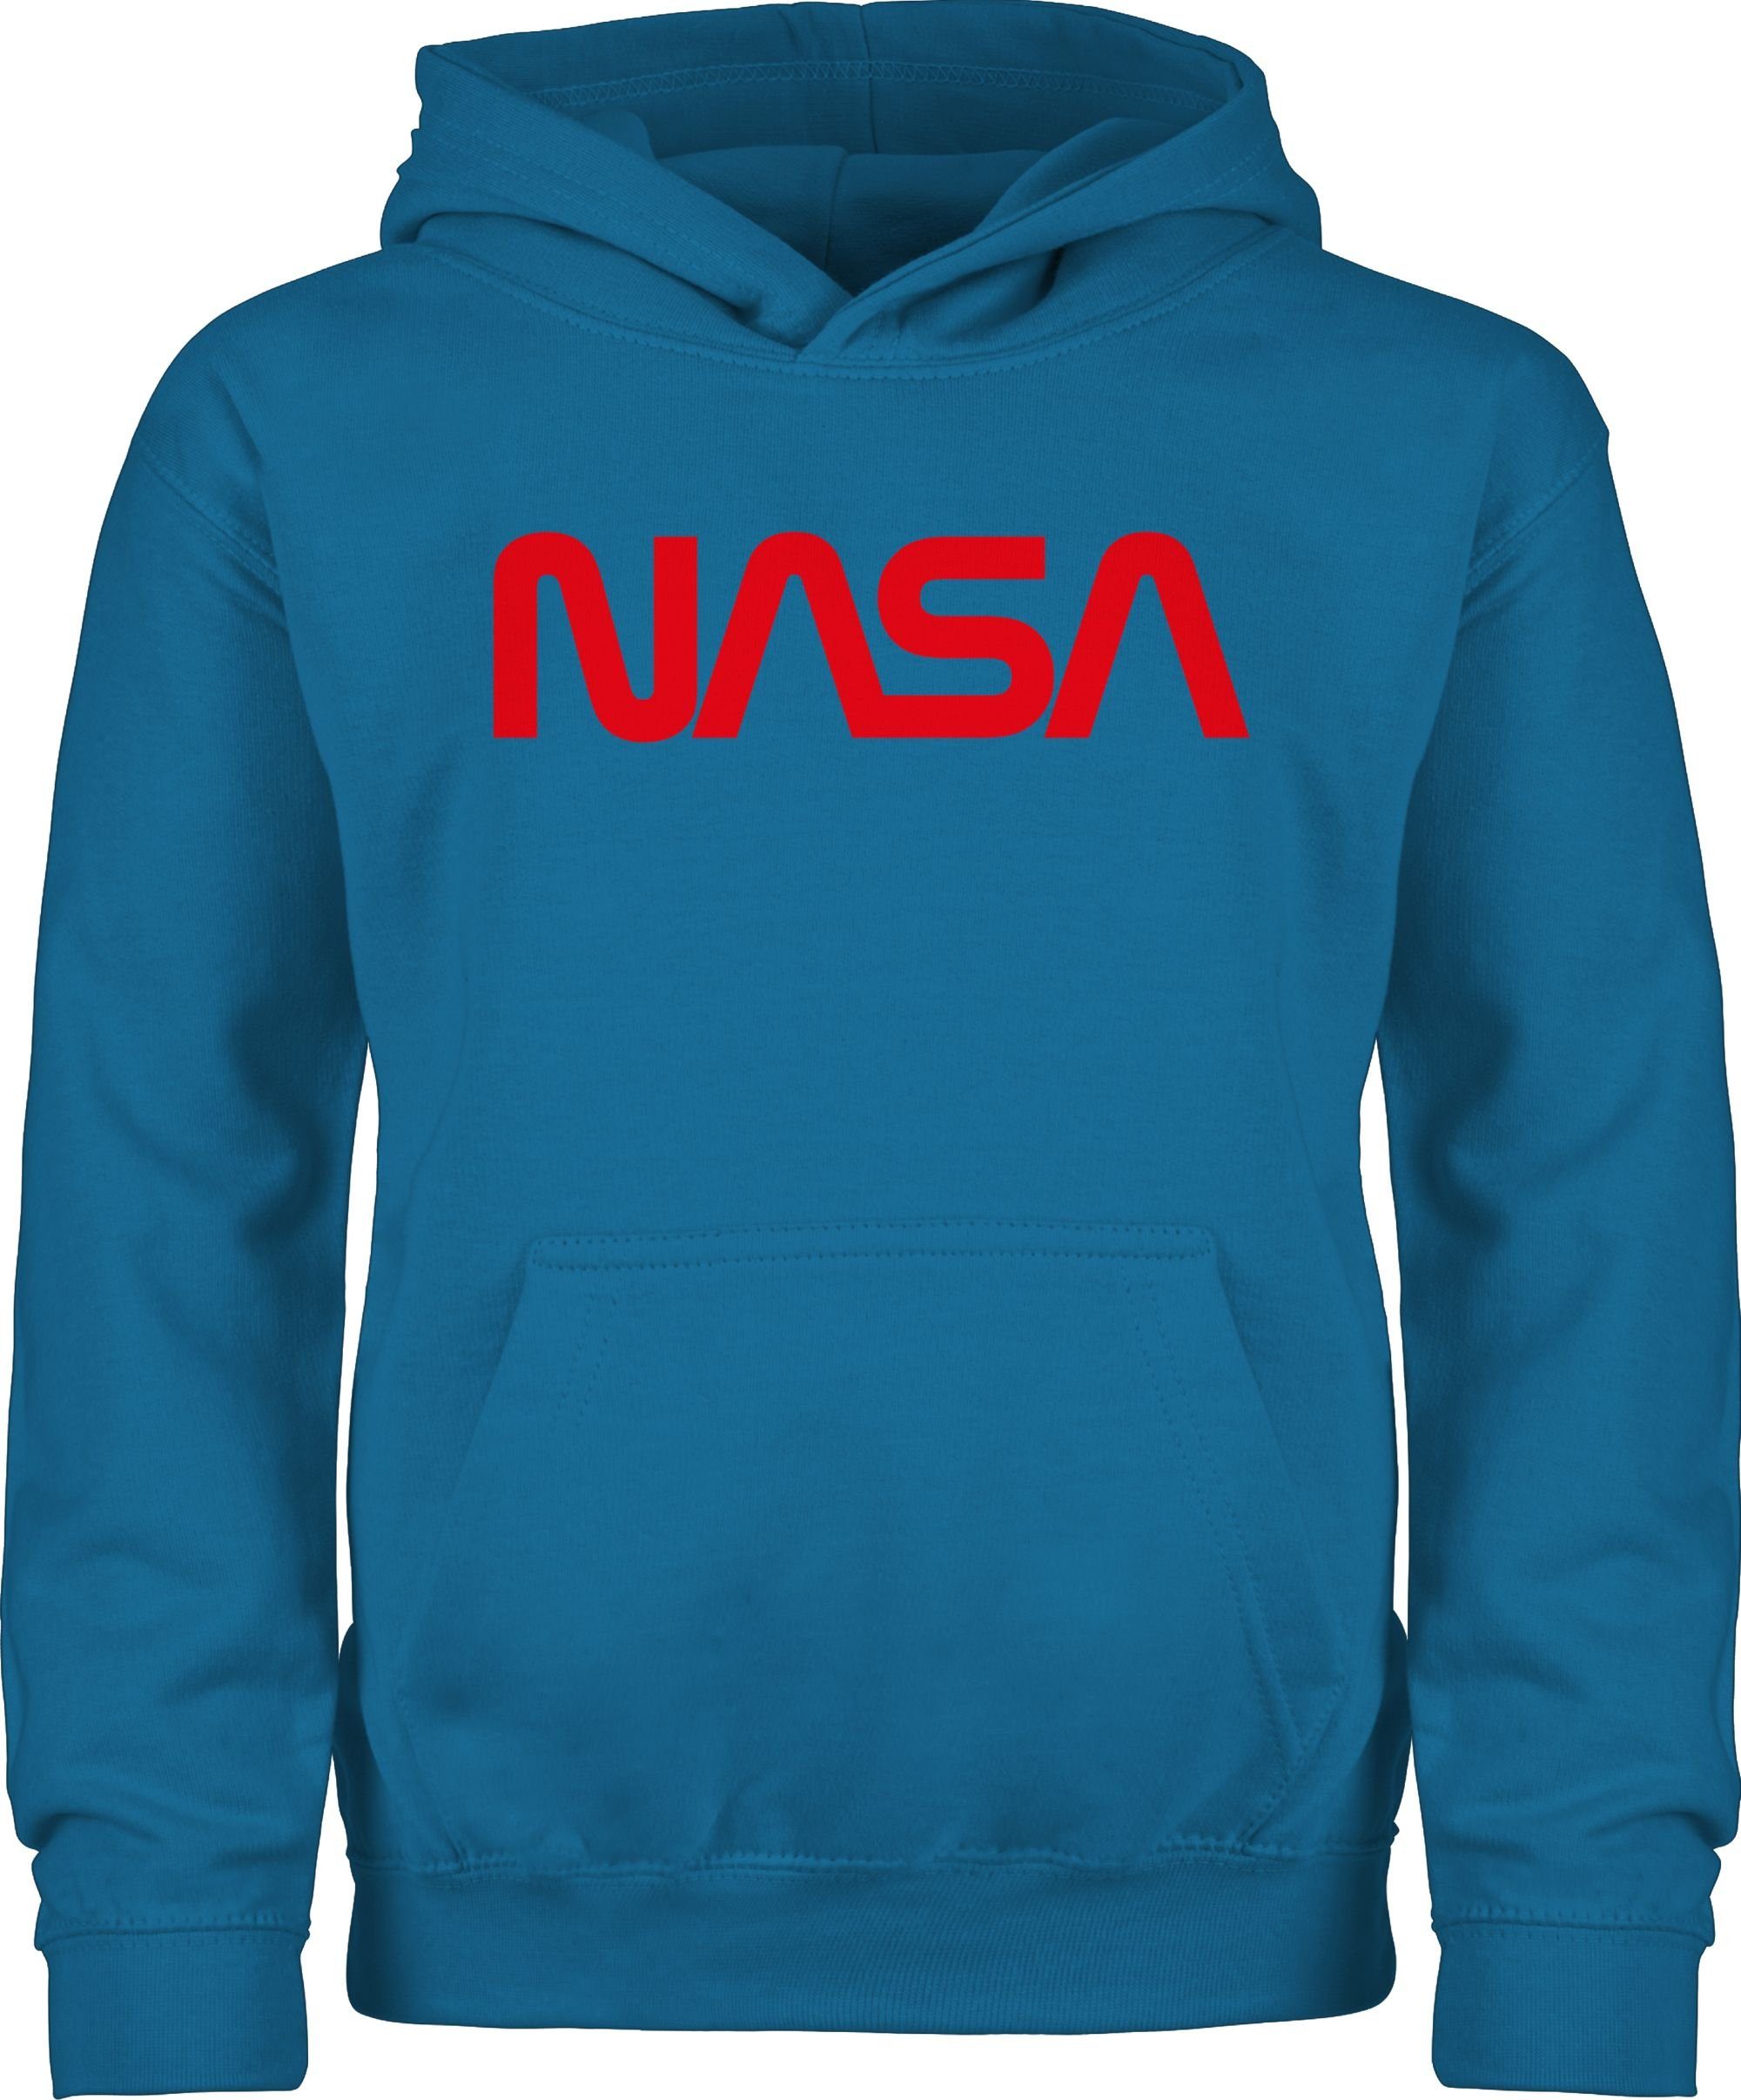 Hoodie Shirtracer Nasa und 1 Astronaut - Raumfahrt Co Mondlandung Himmelblau Kinderkleidung Weltraum